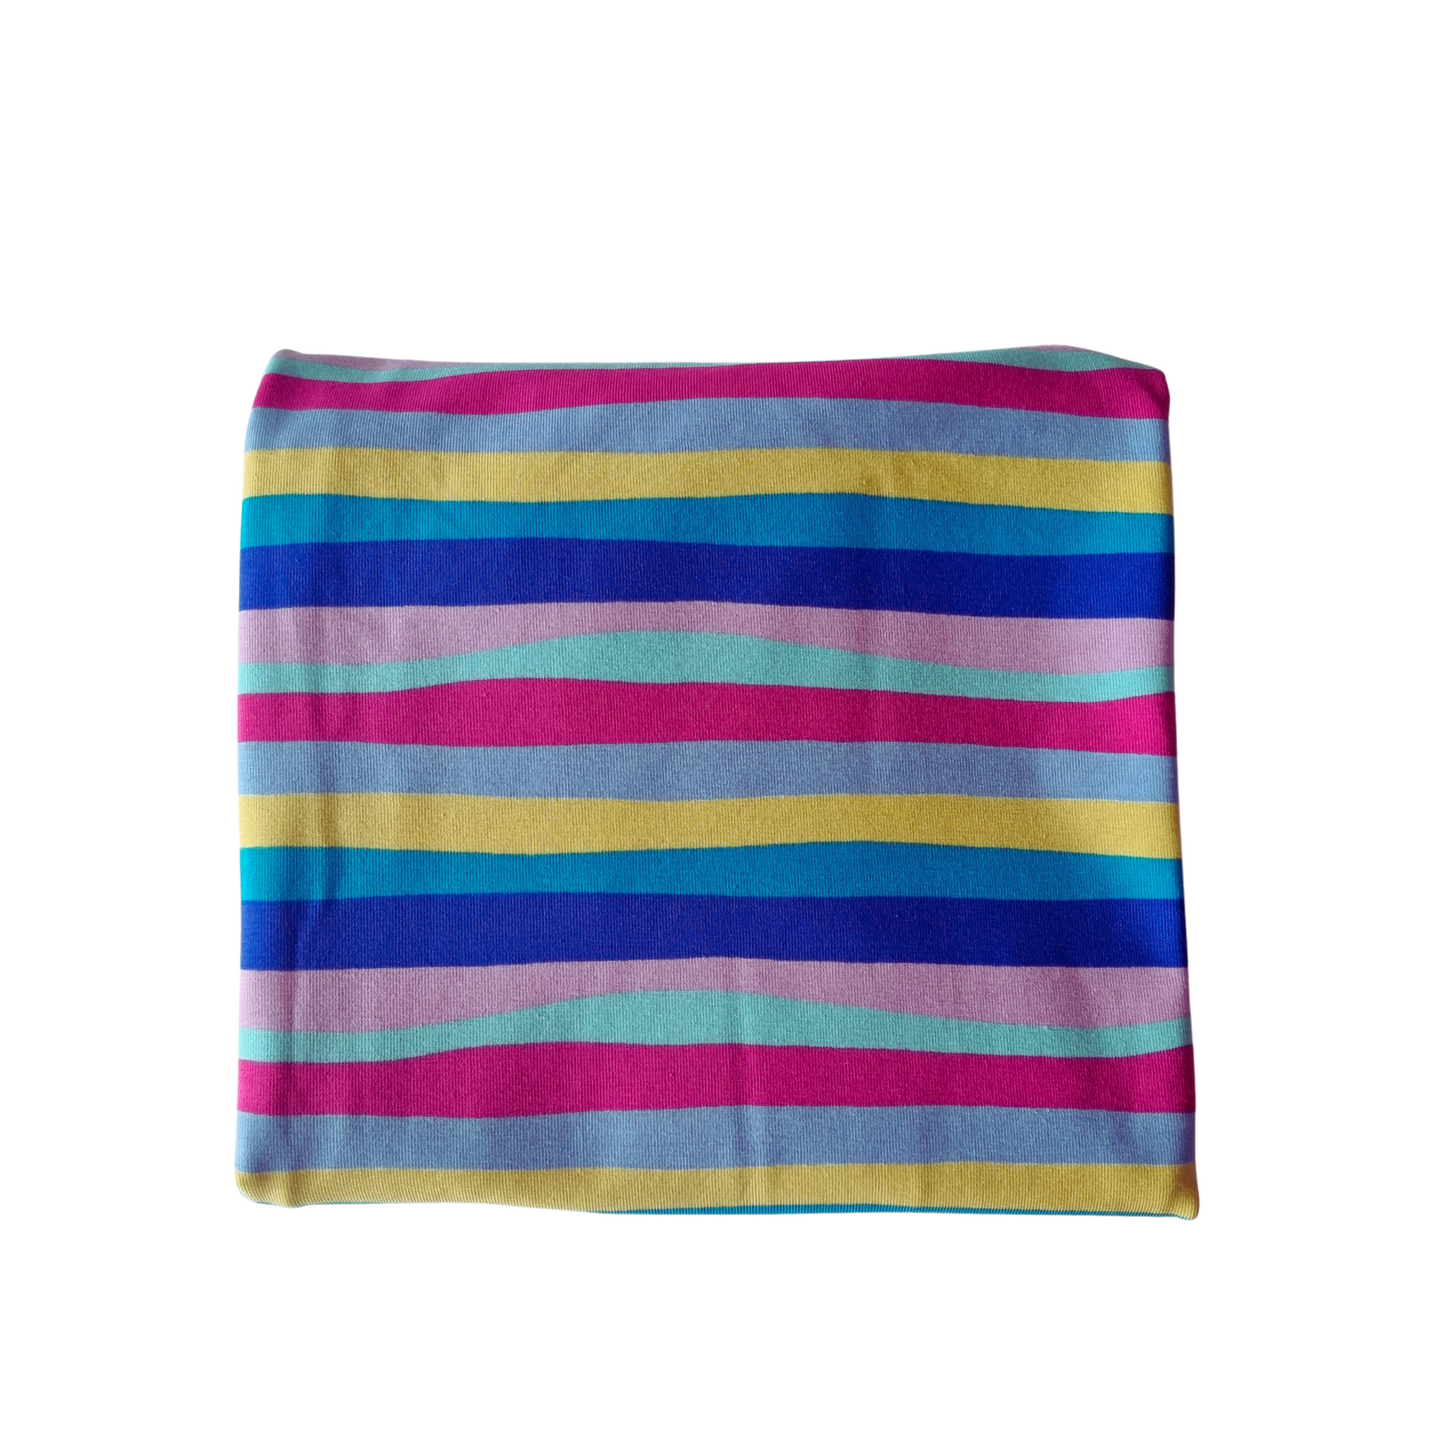 98 cm x 147 cm  | Pastel Striped Cotton Jersey